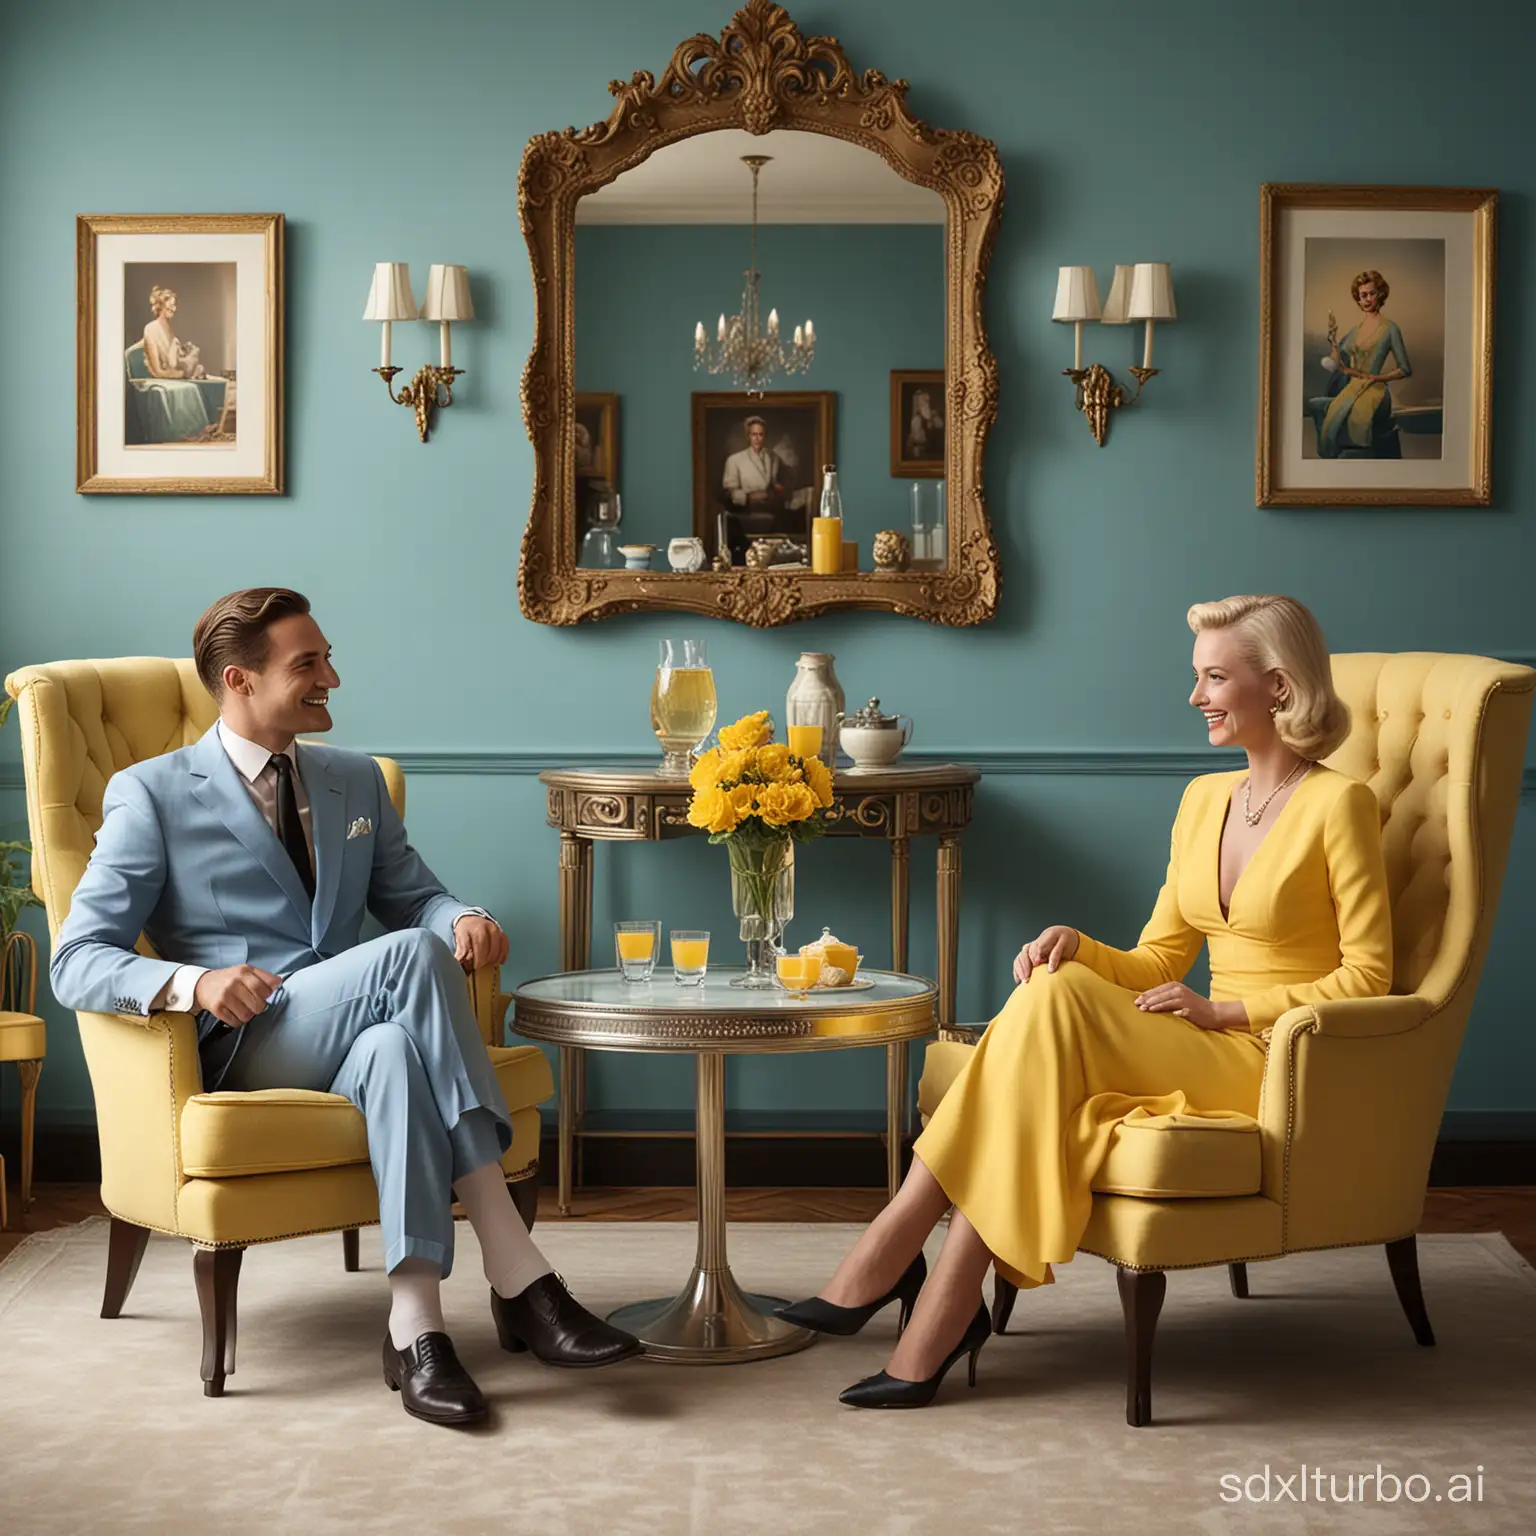 1950s-Elegant-Couple-Toasting-in-Pastel-Blue-Living-Room-Scene